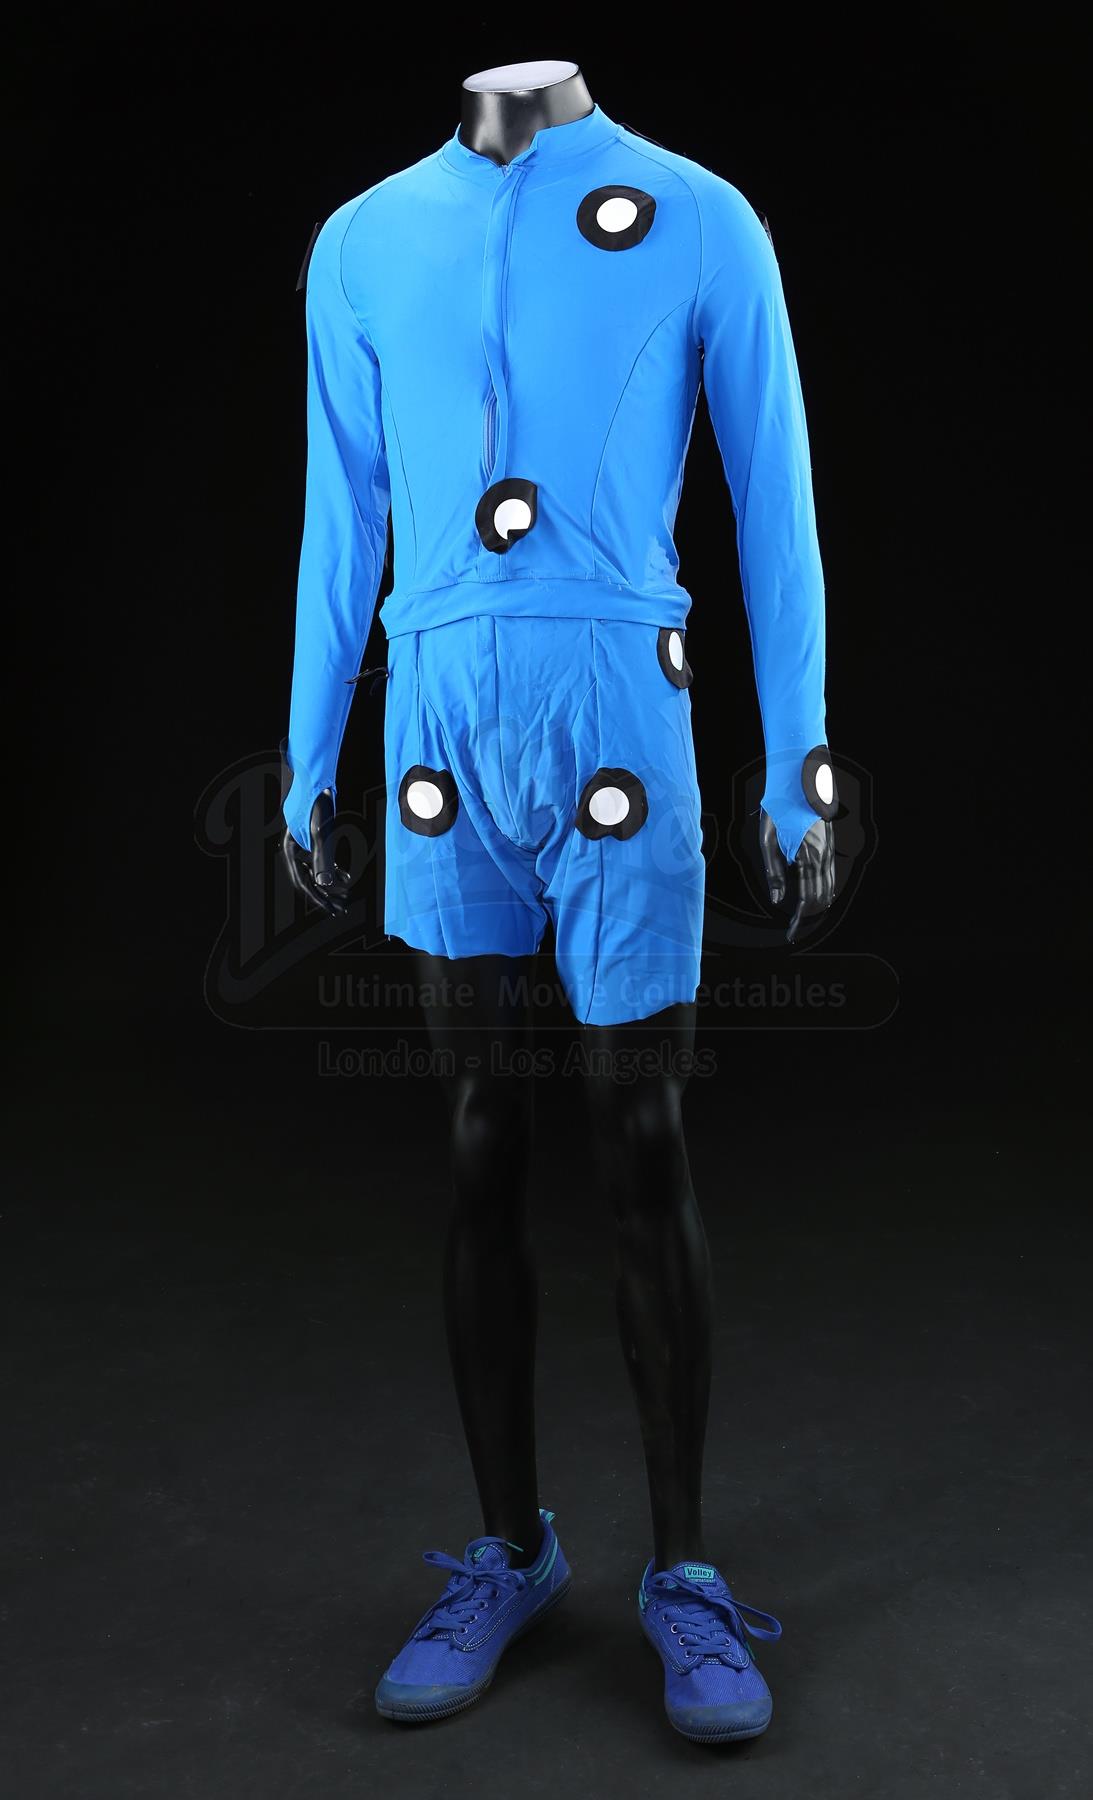 homer motion capture suit